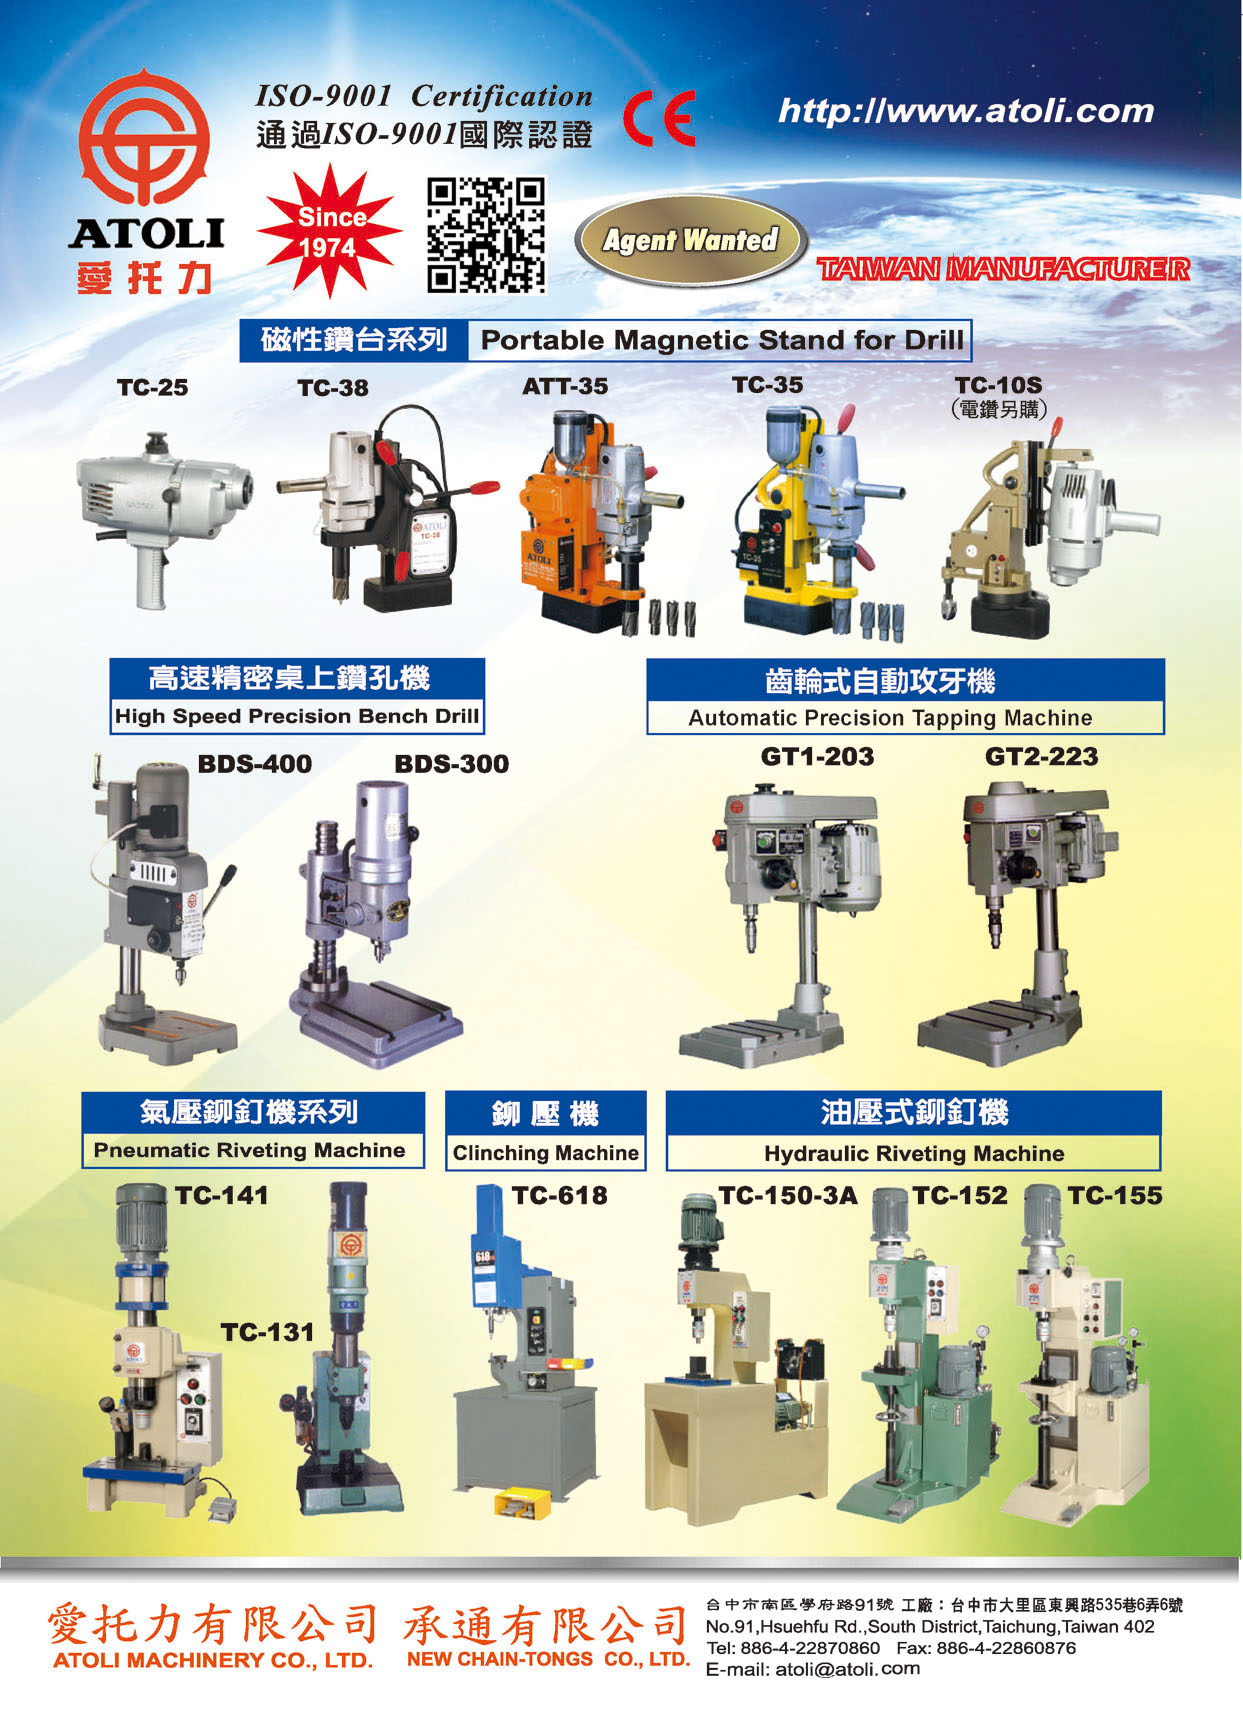 Who Makes Machinery in Taiwan ATOLI MACHINERY CO., LTD.